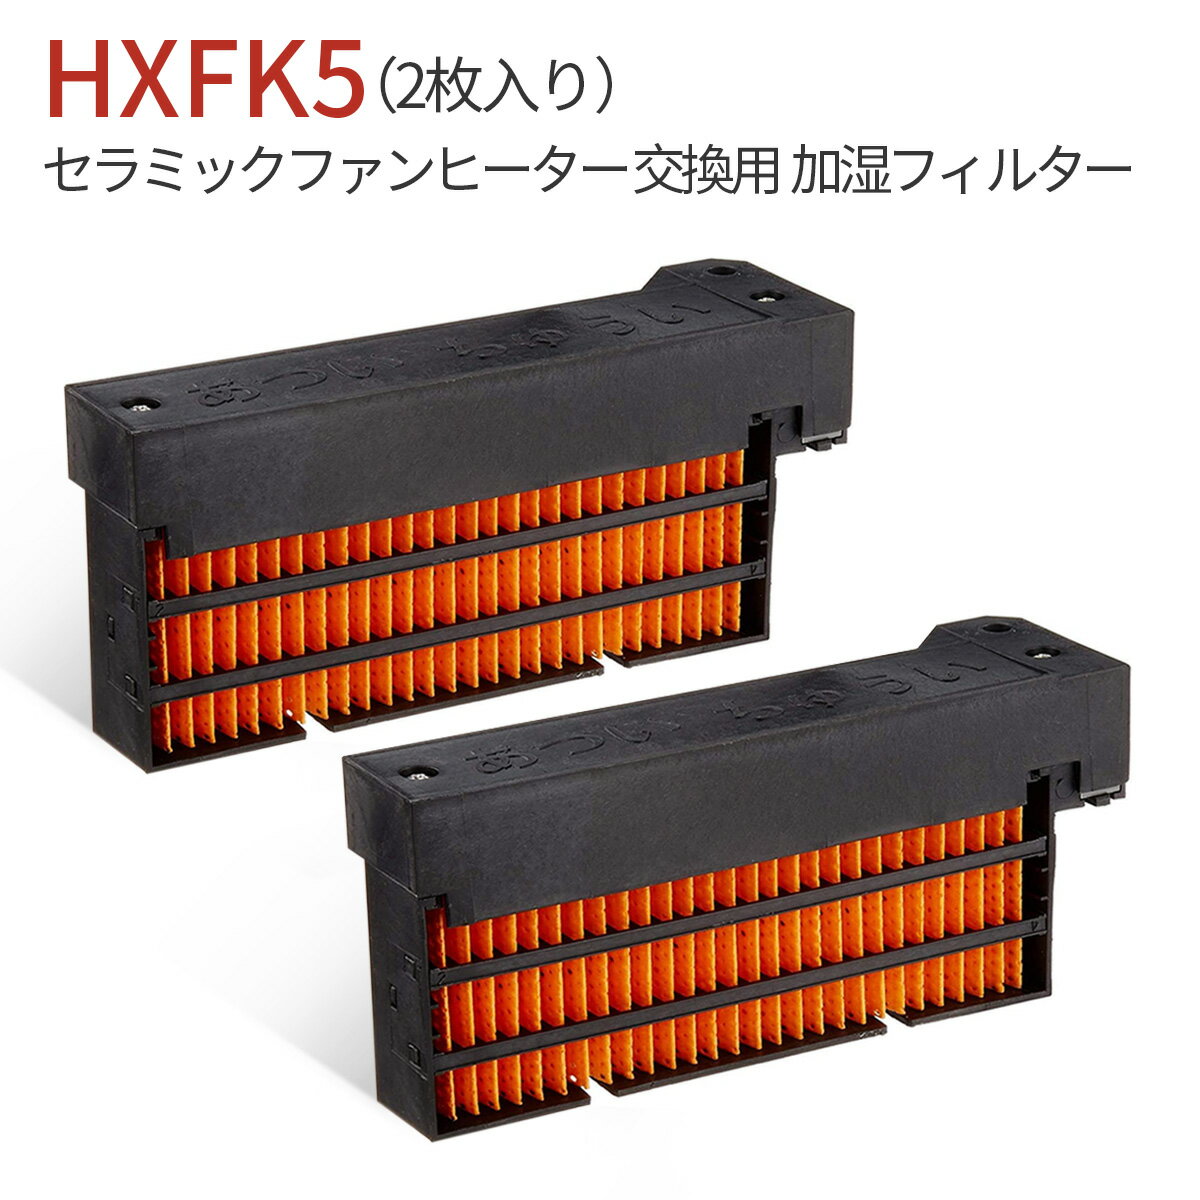 HX-FK5 シャープ 加湿フィルター hx-fk5 (HX-FK2 HX-FK3 HX-FK4 HX-FK6 と同等品) セラミックファンヒーター 交換用 フィルター 「互換品/2枚入り」 1